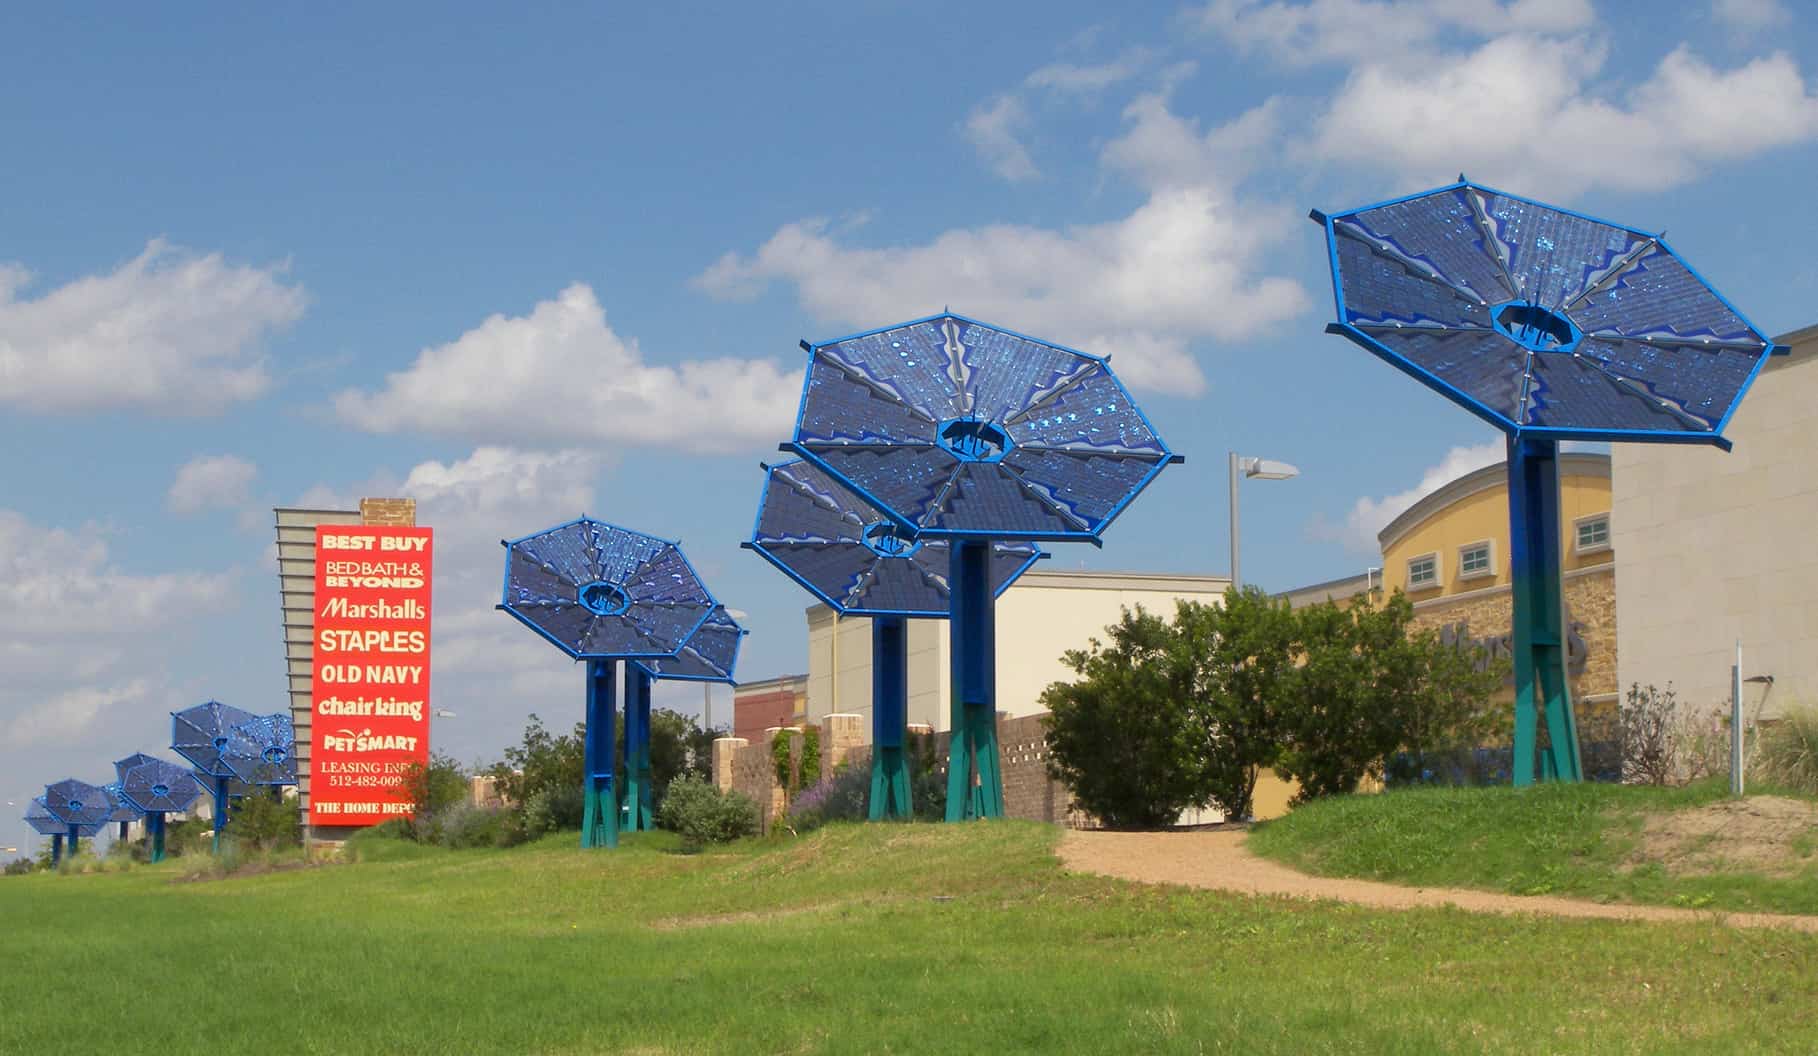 Solar power: Texas' lifeline amidst sweltering heat waves